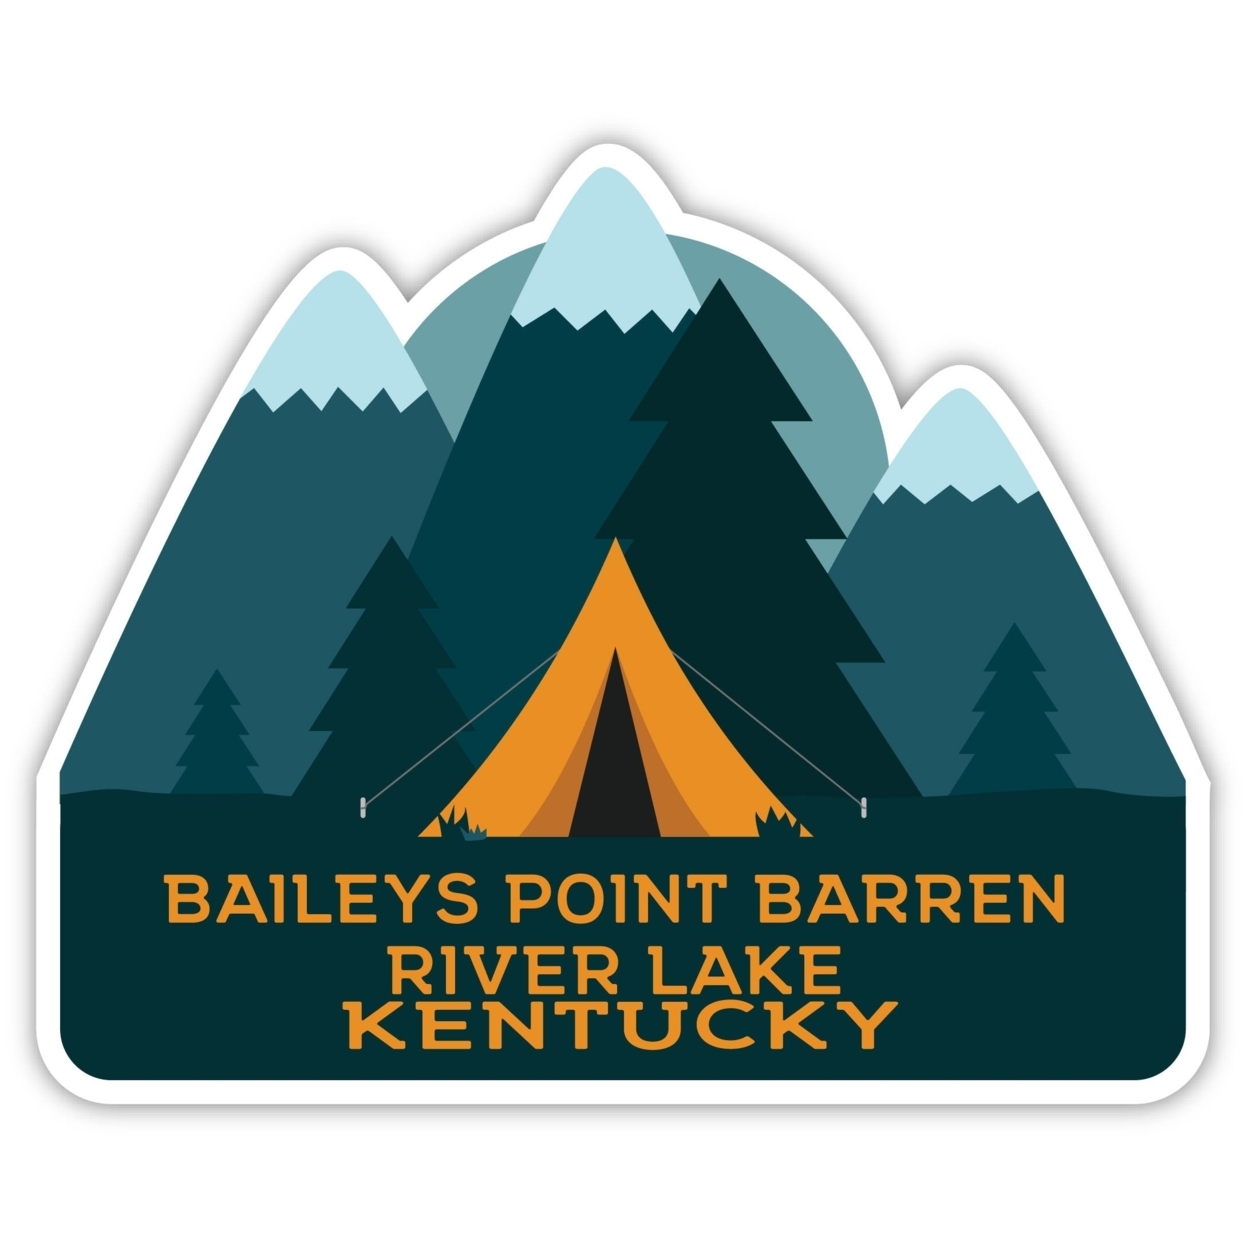 Baileys Point Barren River Lake Kentucky Souvenir Decorative Stickers (Choose Theme And Size) - Single Unit, 12-Inch, Tent